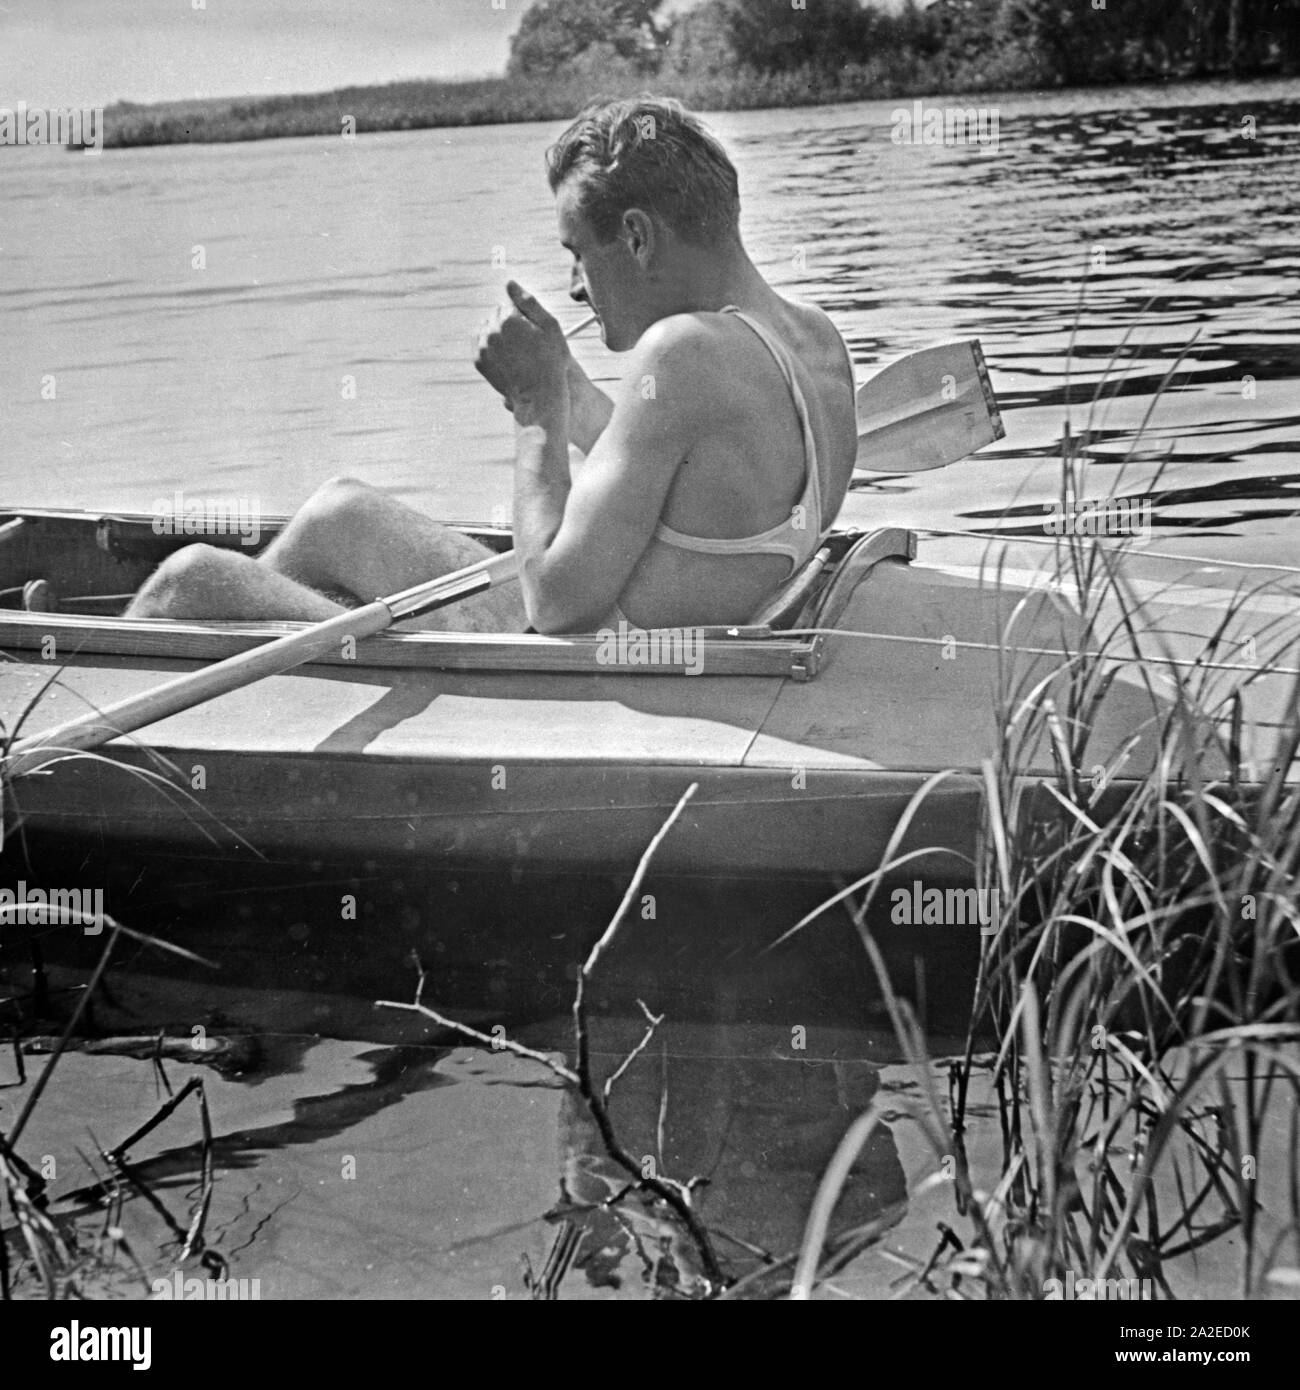 Ein Mann zündet sich in seinem Klepper Faltboot im Schilf entspannt eine Zigarette un, Deutschland 1930 er Jahre. Un homme allumer une cigarette dans son pliant Klepper bateau sur un lac, l'Allemagne des années 1930. Banque D'Images